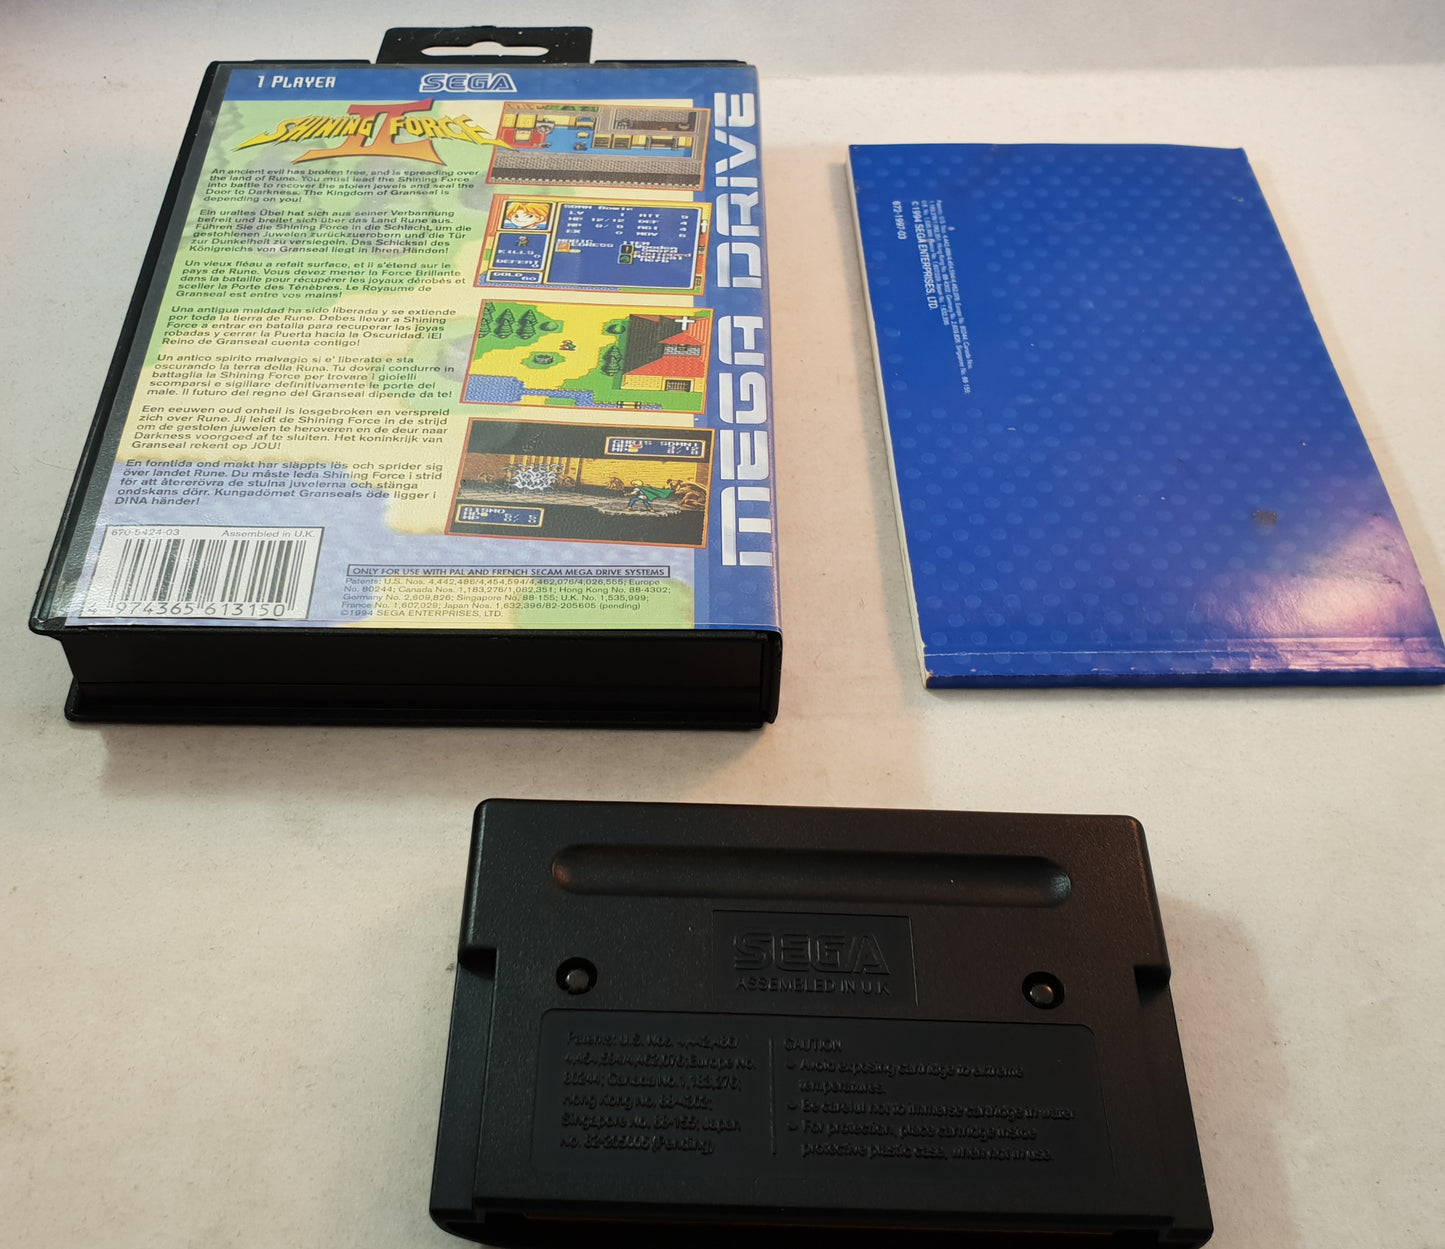 Shining Force II Sega Mega Drive Game